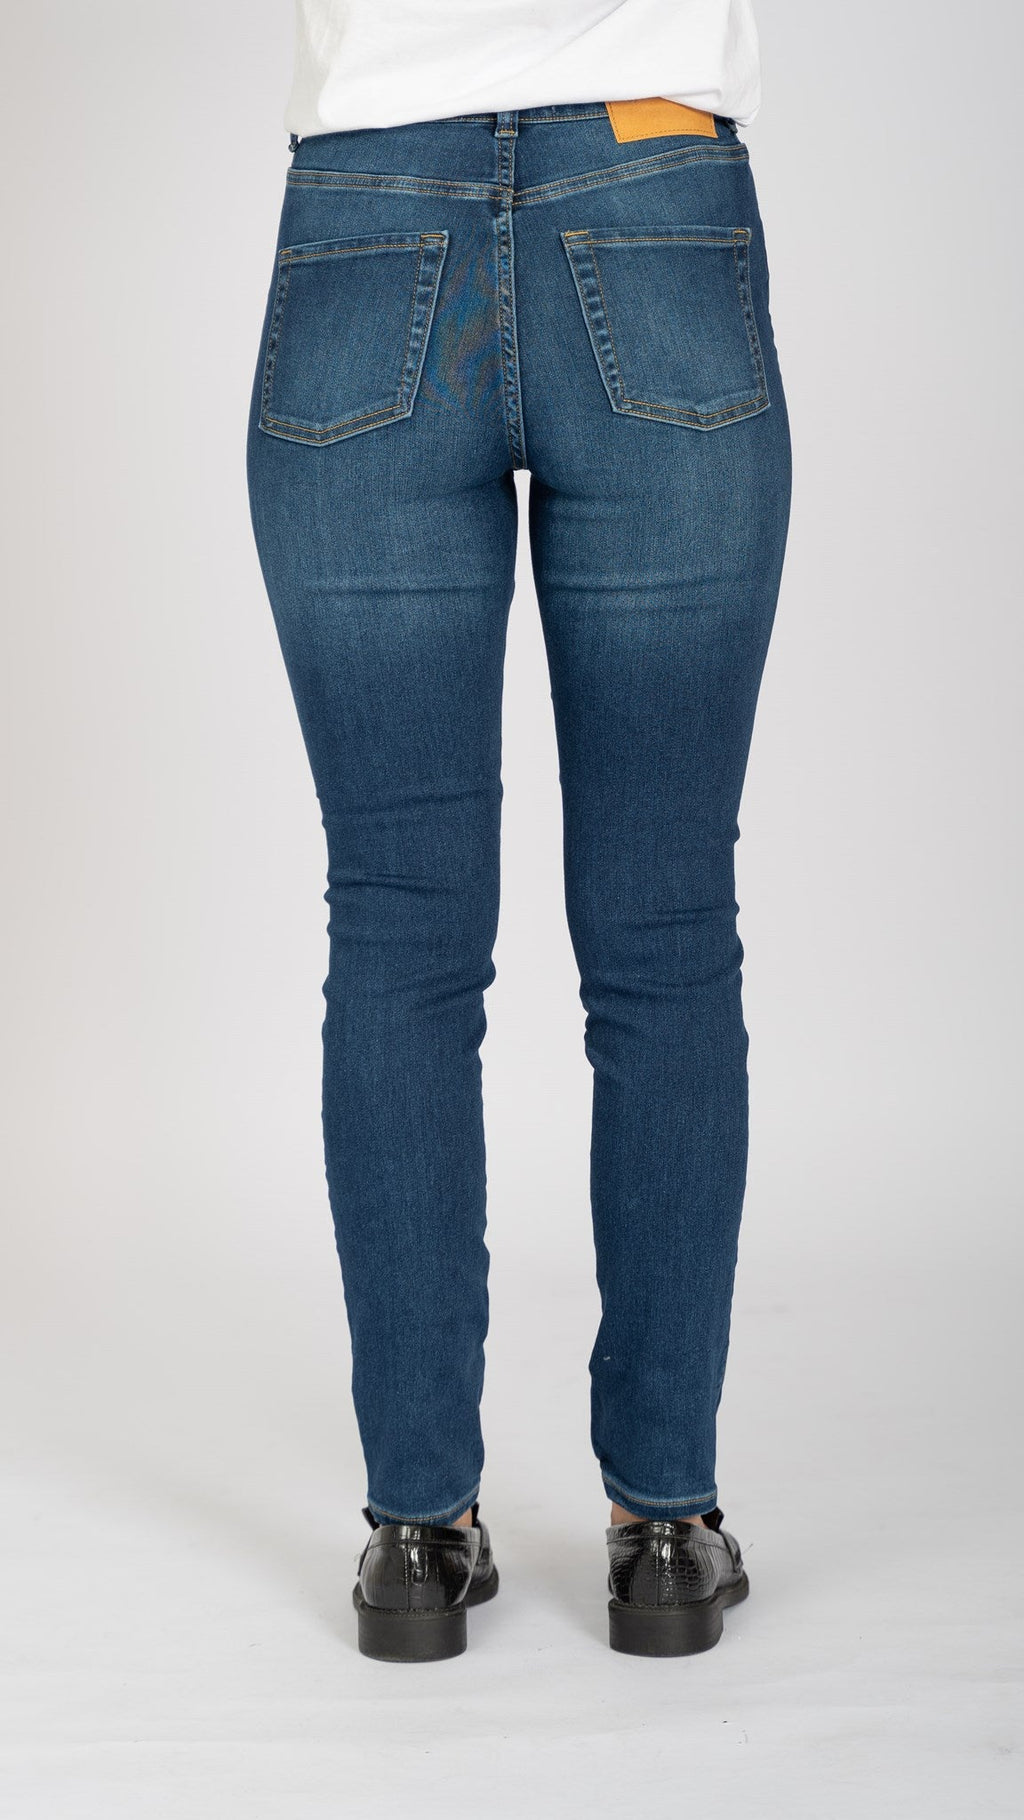 The Original Performance Skinny jeans - medium blauwe denim